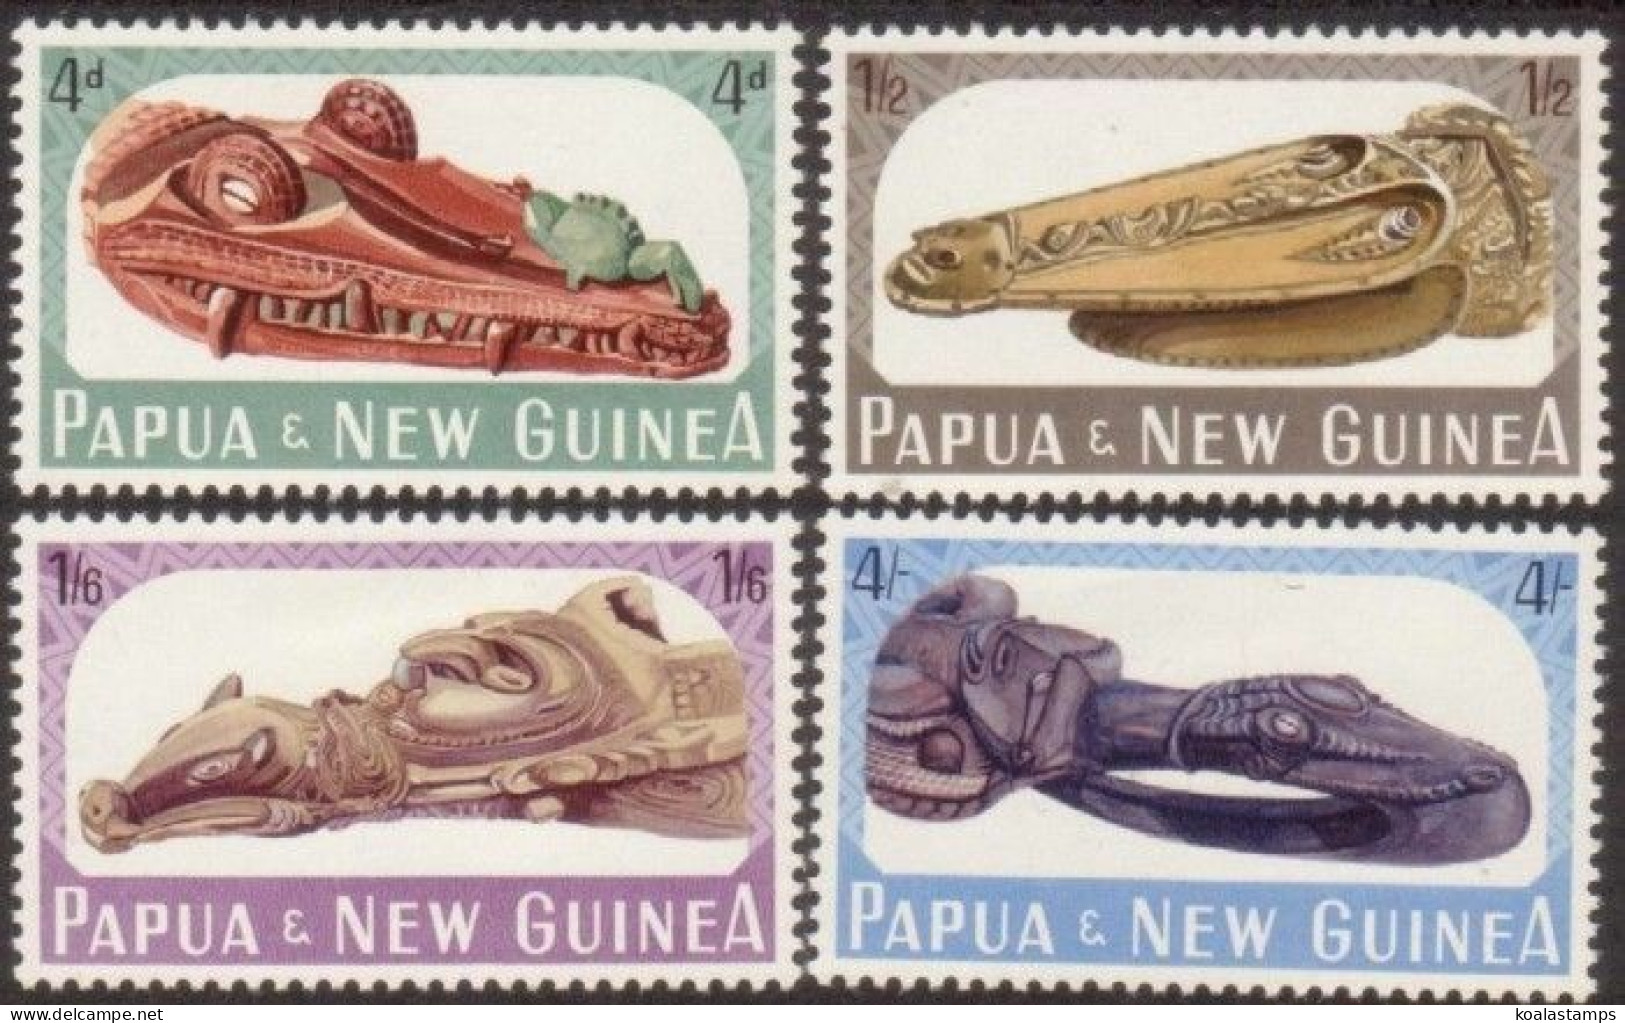 Papua New Guinea 1964 SG72-75 Sepik River Canoe Prows Set MNH - Papua New Guinea